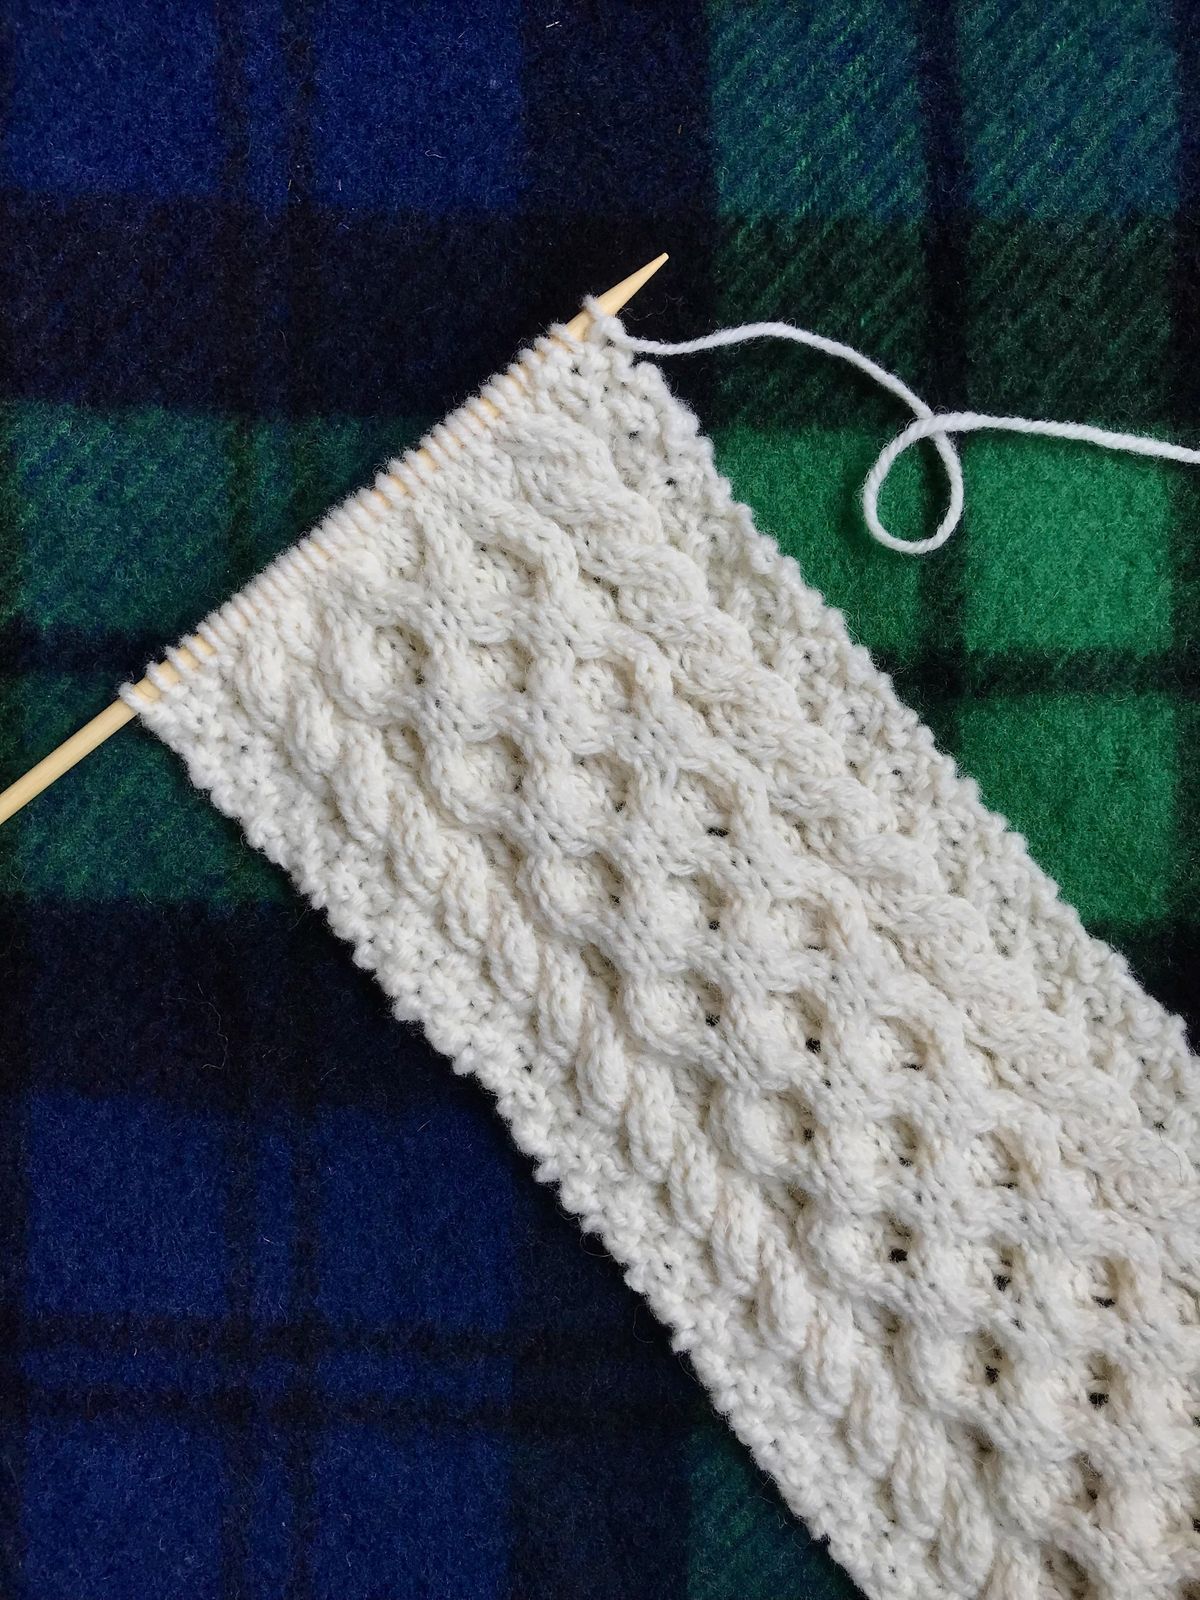 Knit an Irish Aran Scarf from Irish Wool